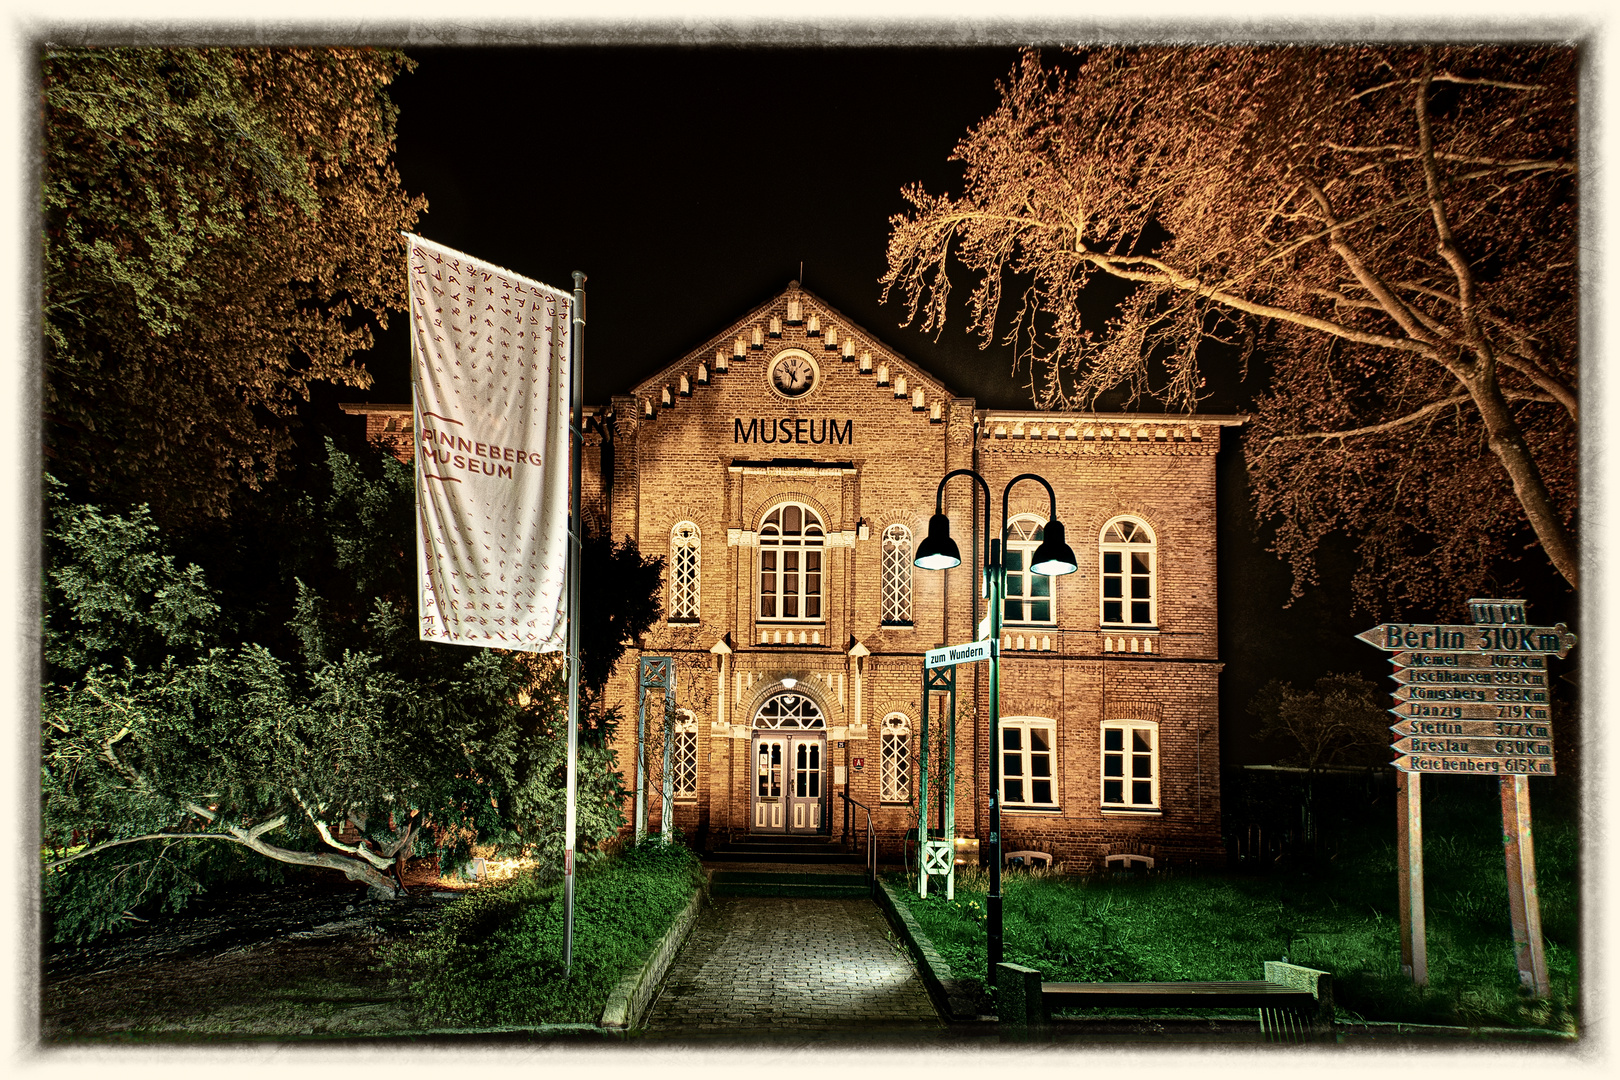 Pinneberger Stadtmuseum